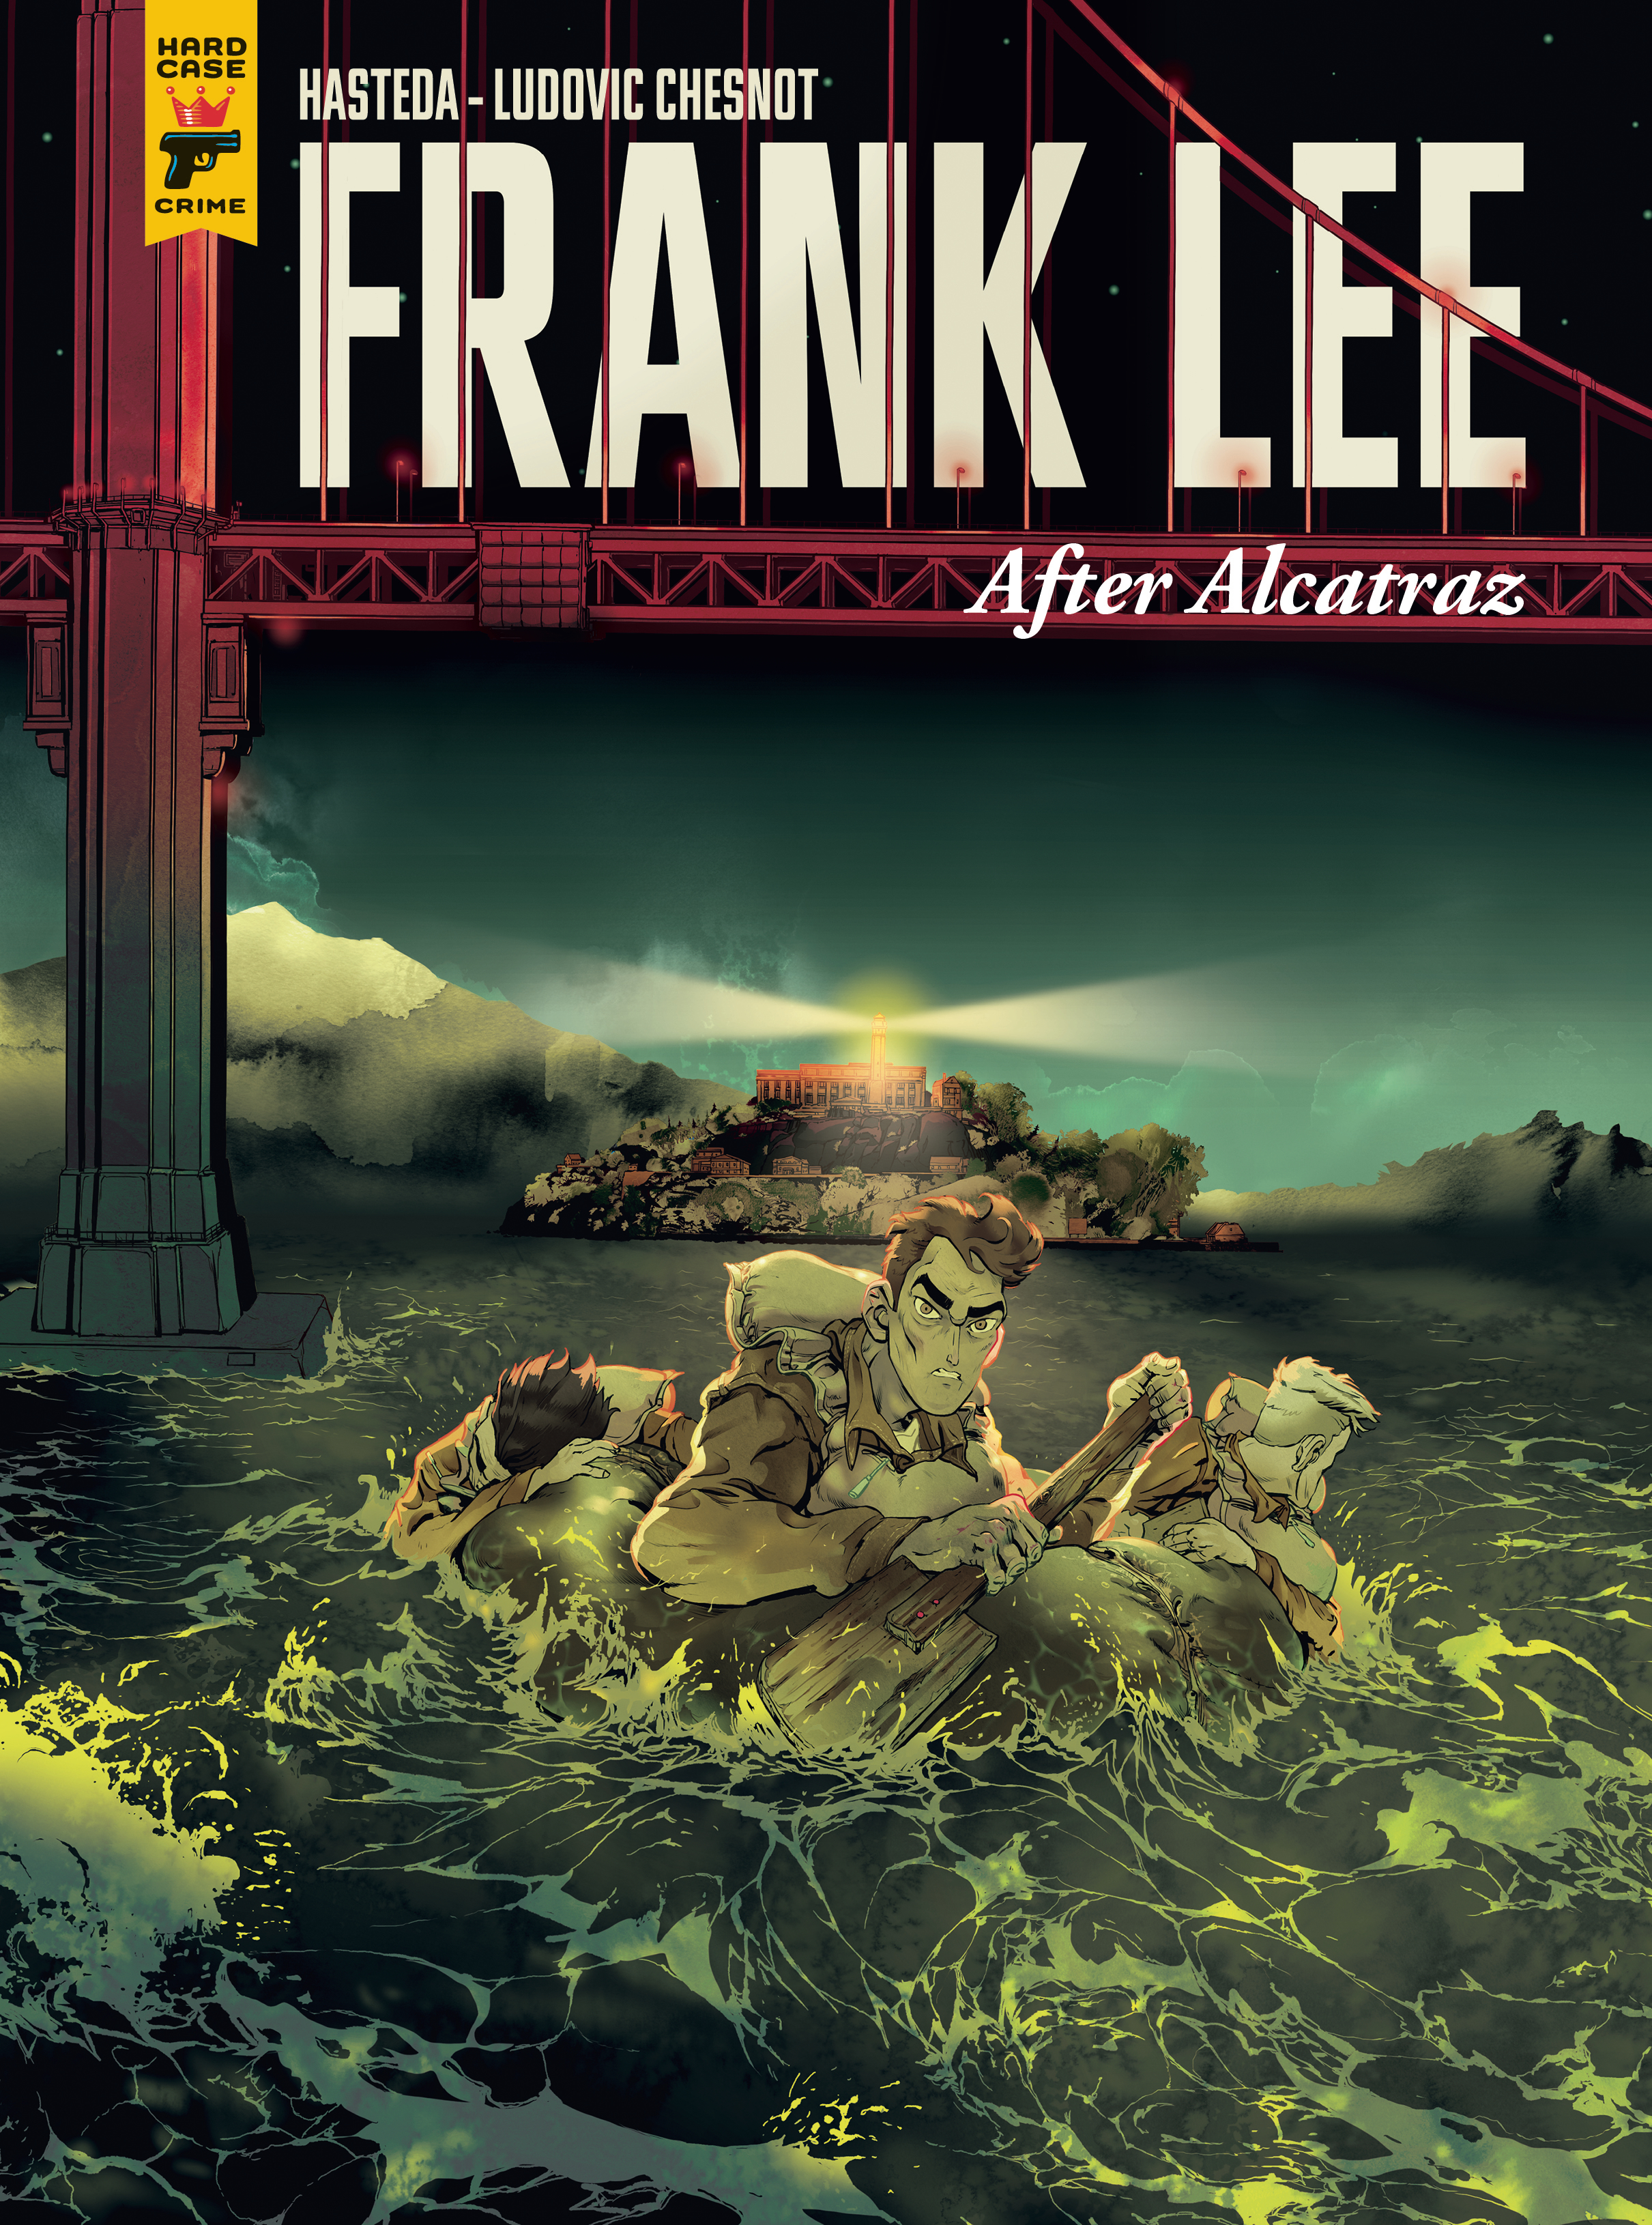 Frank Lee After Alcatraz Hardcover